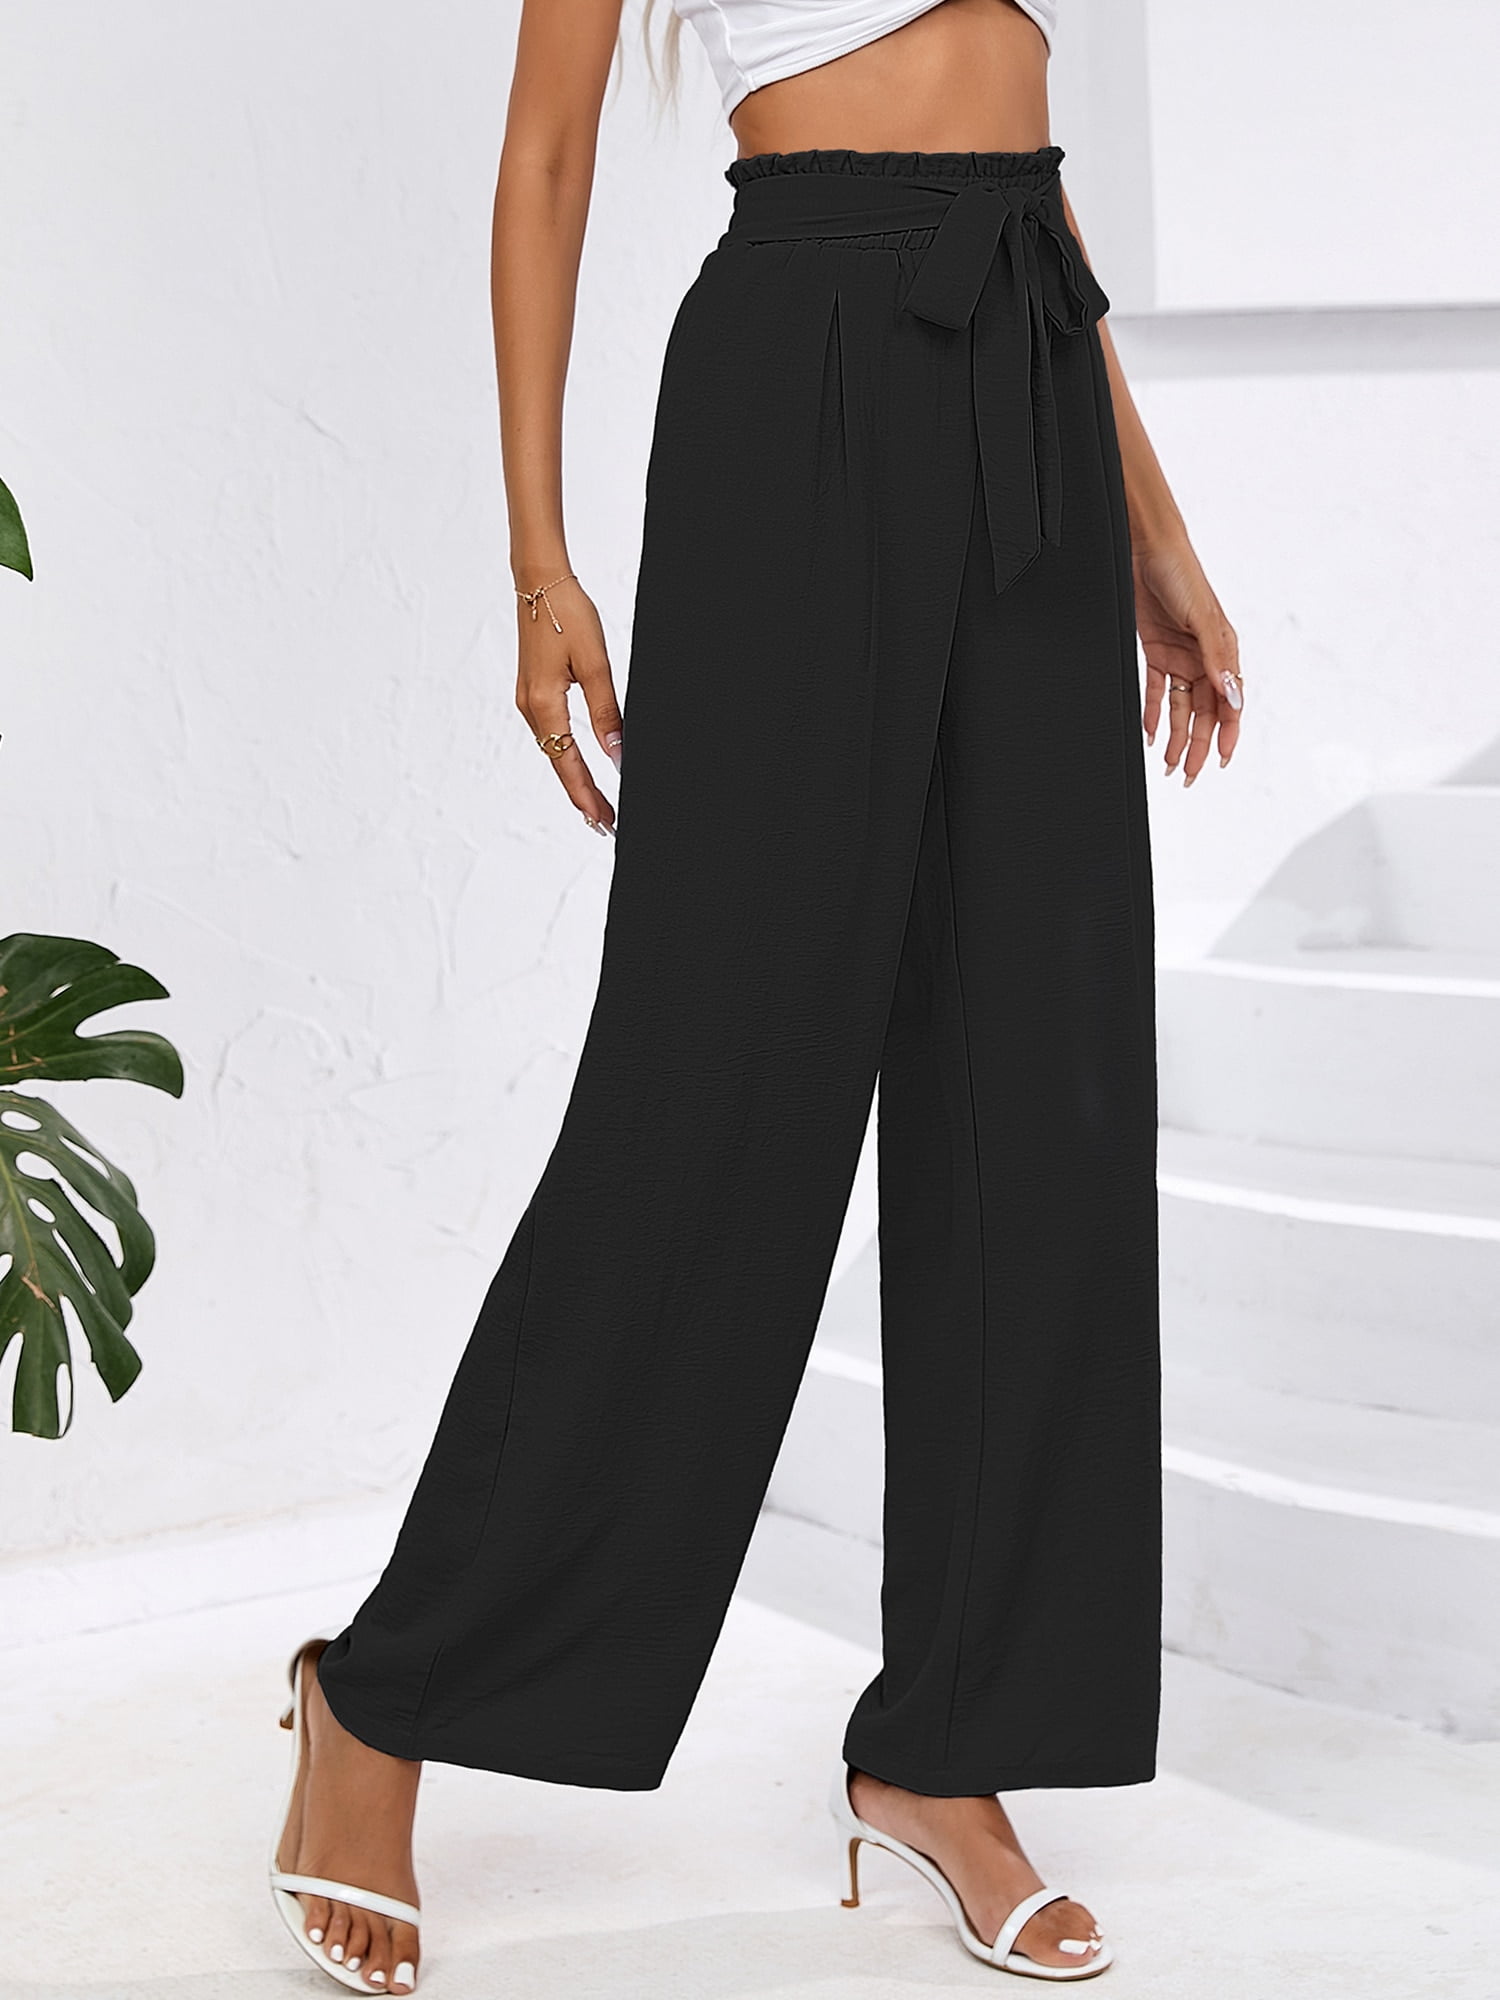 Favlux Fashion Women's Casual Flowy Pants Black Size Medium Elastic Waist w/ tie | eBay